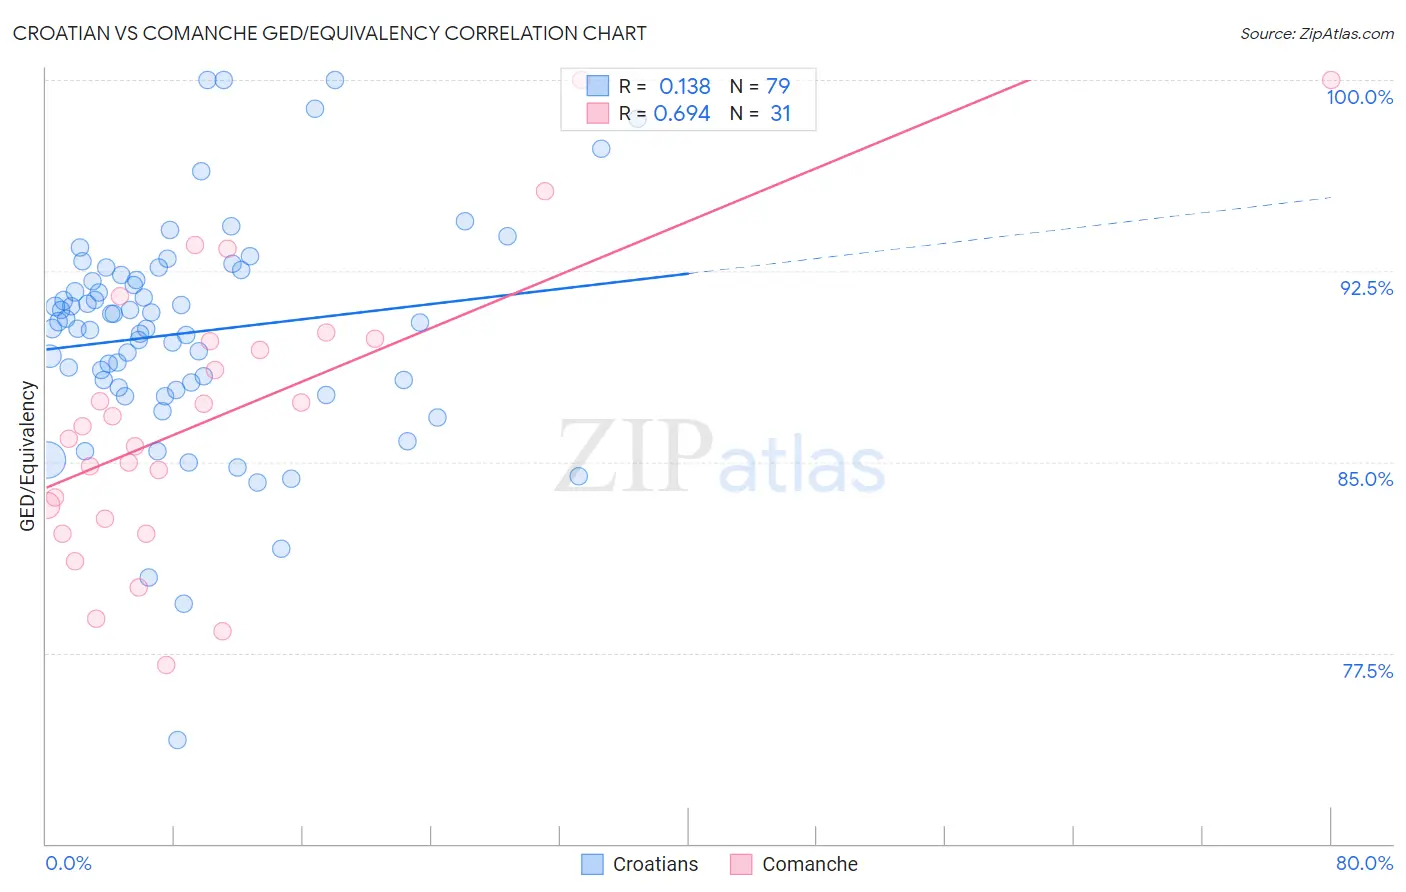 Croatian vs Comanche GED/Equivalency